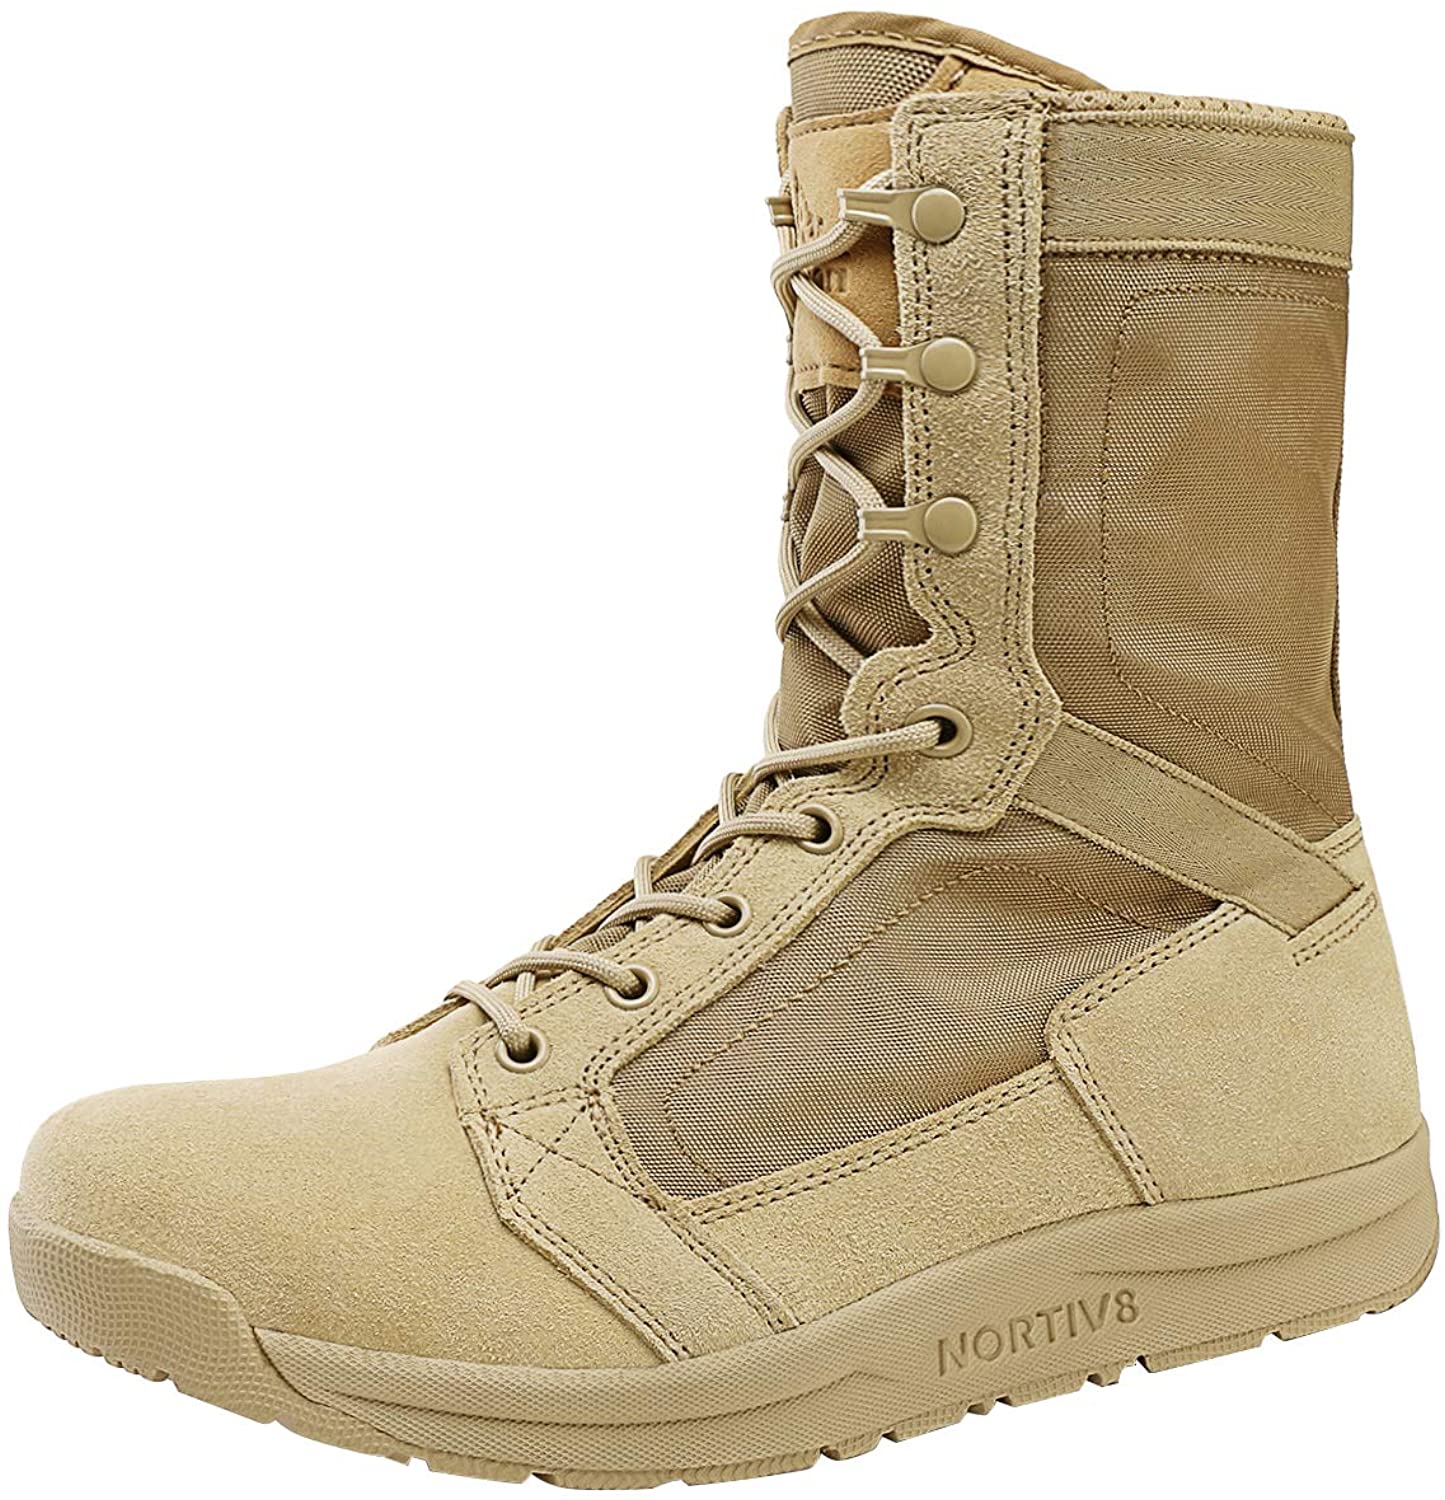 NORTIV 8 Men's Military Tactical Boots Lightweight Jungle Boots 